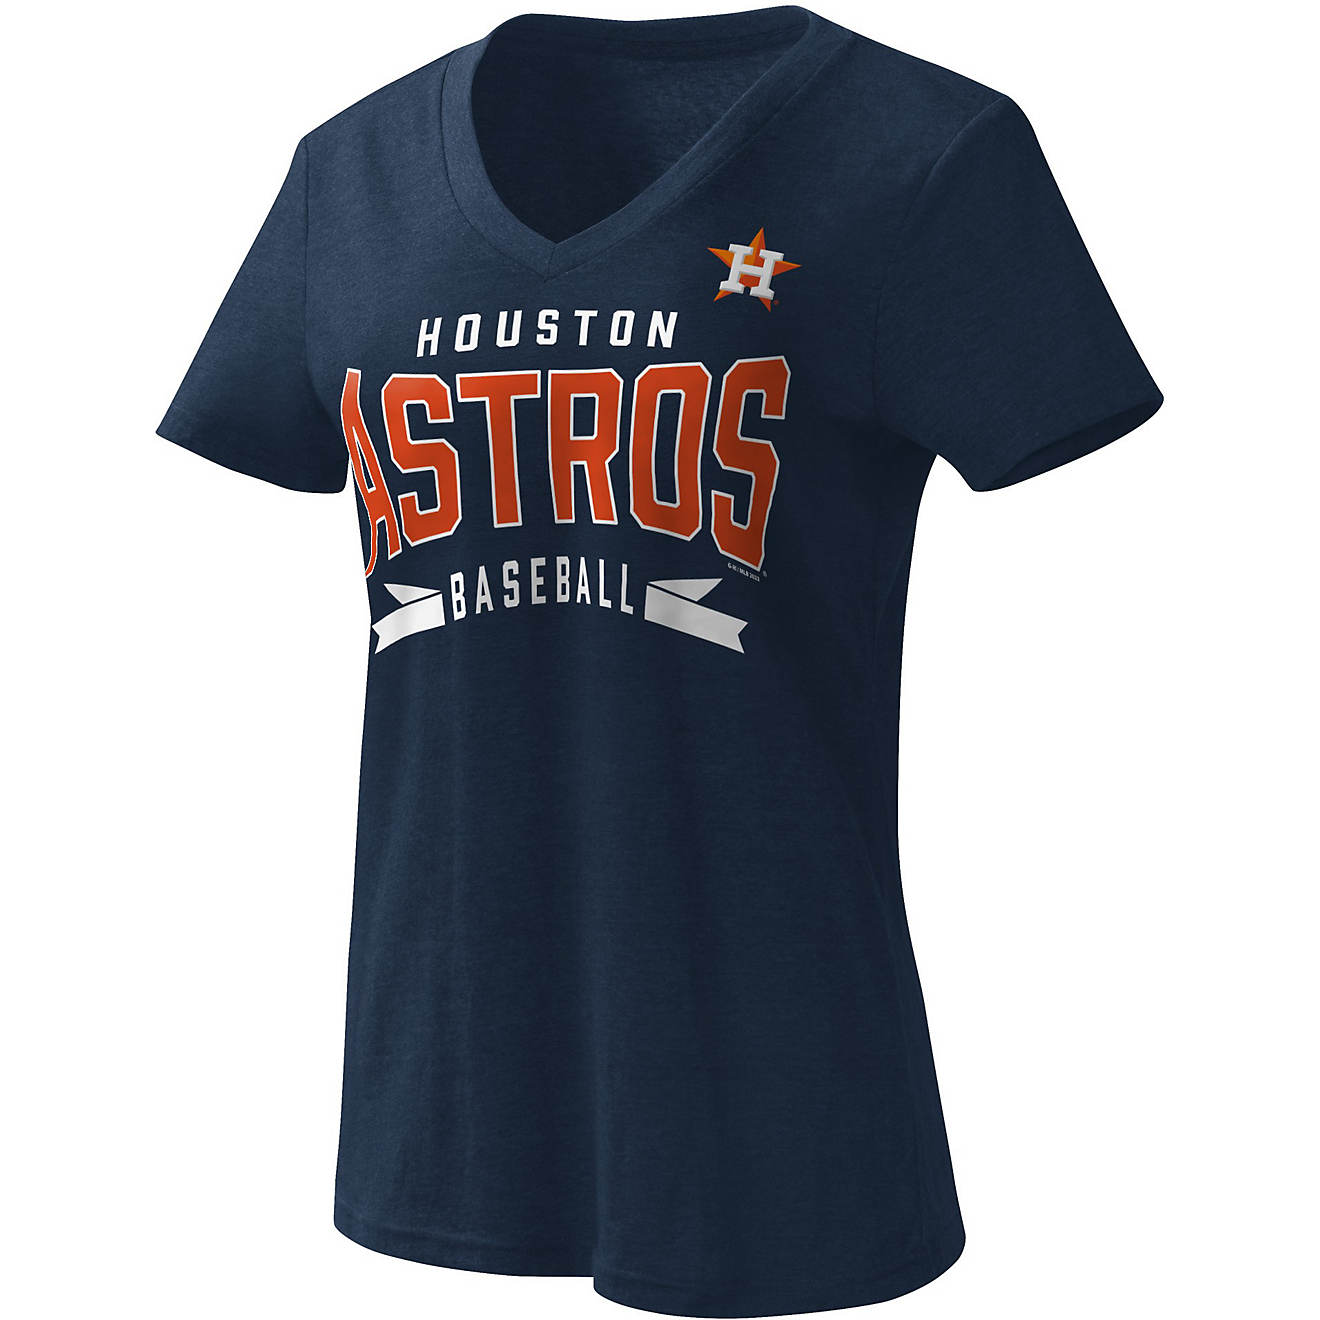 G-III For Her Women's Houston Astros No-Hitter T-shirt